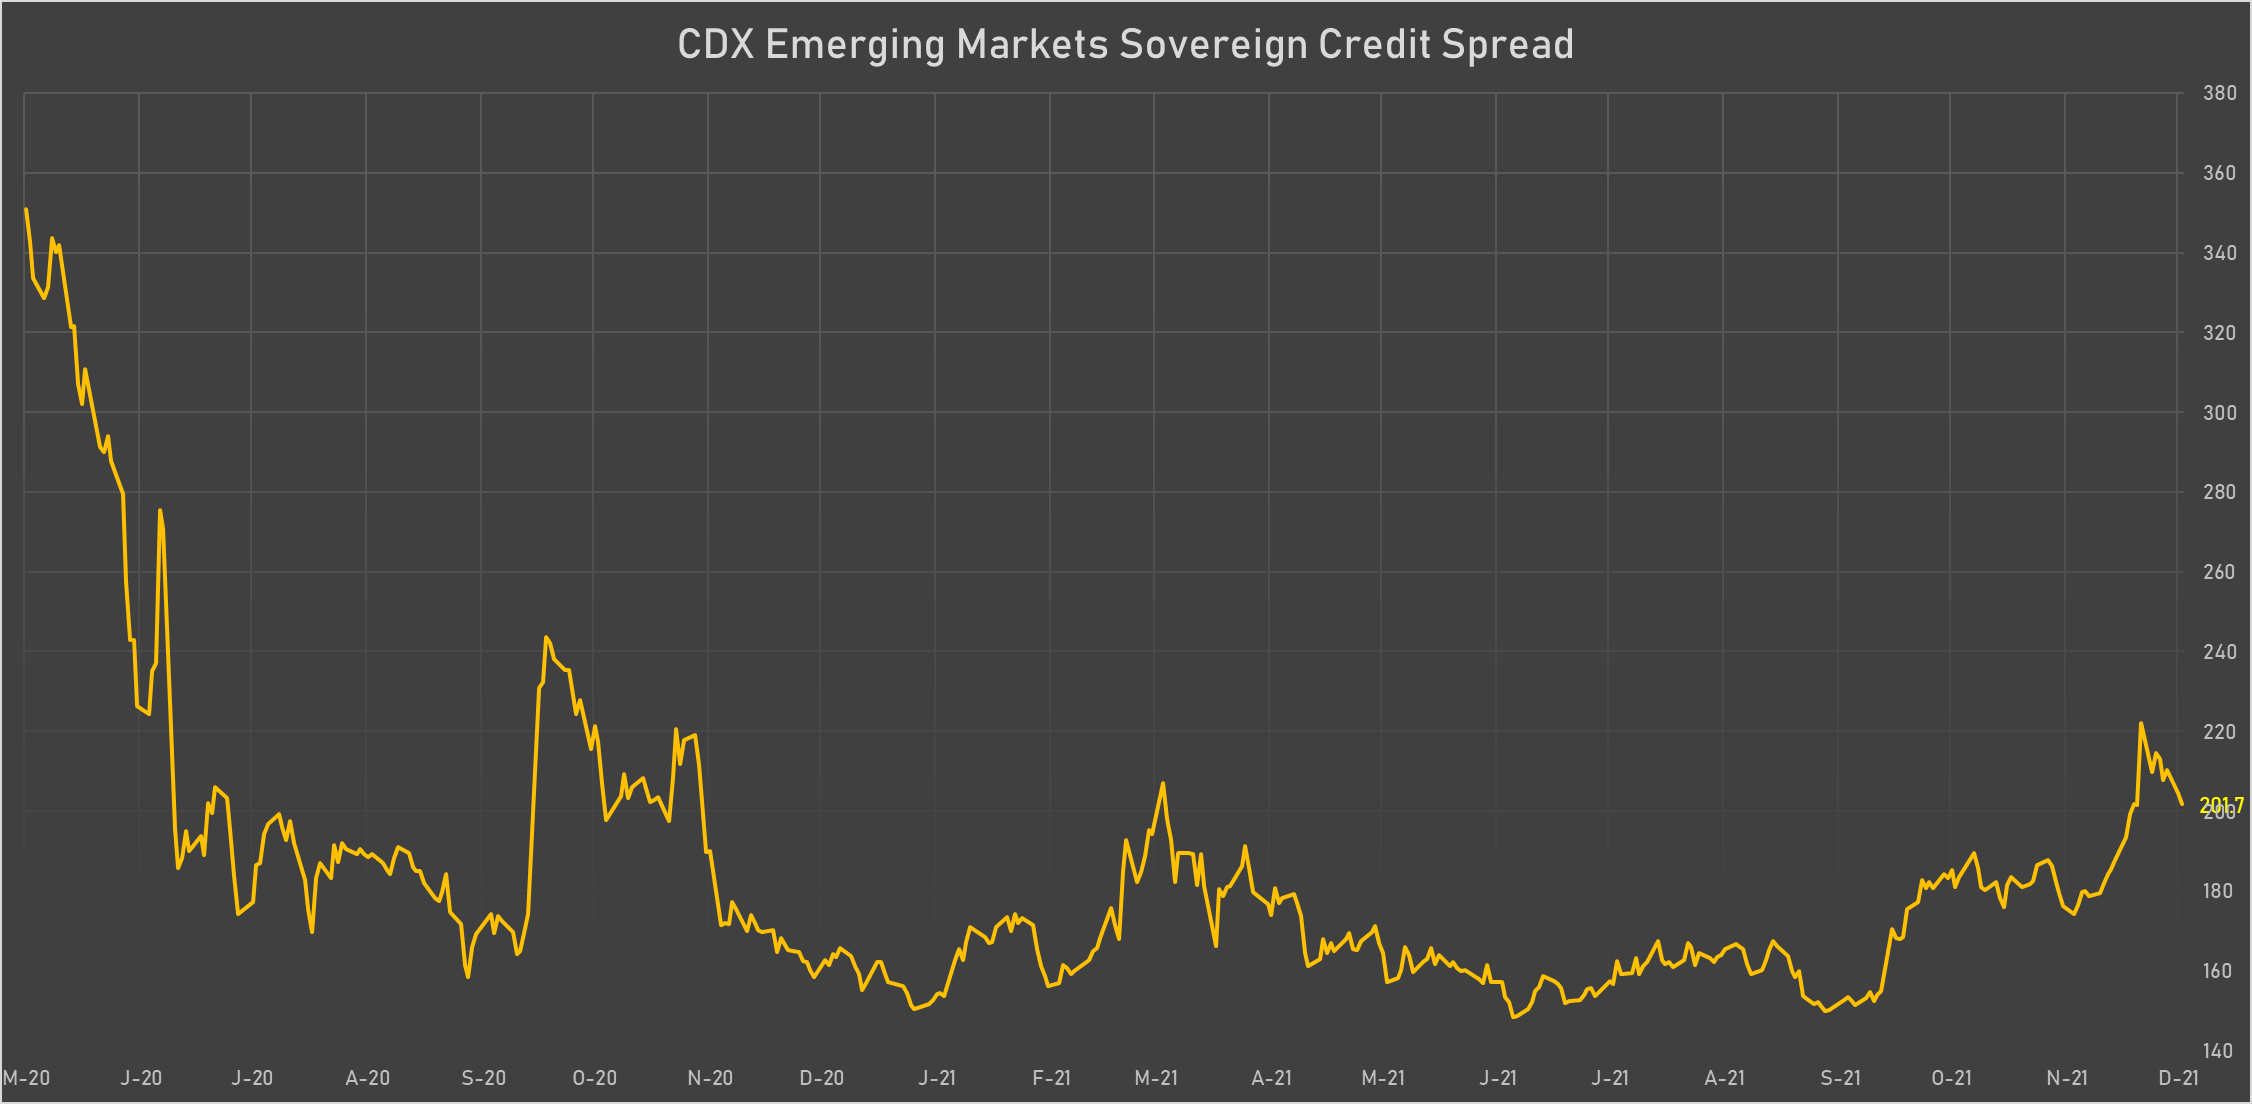 CDX EM Sovereign Credit Spreads | Sources: phipost.com, Refinitiv data